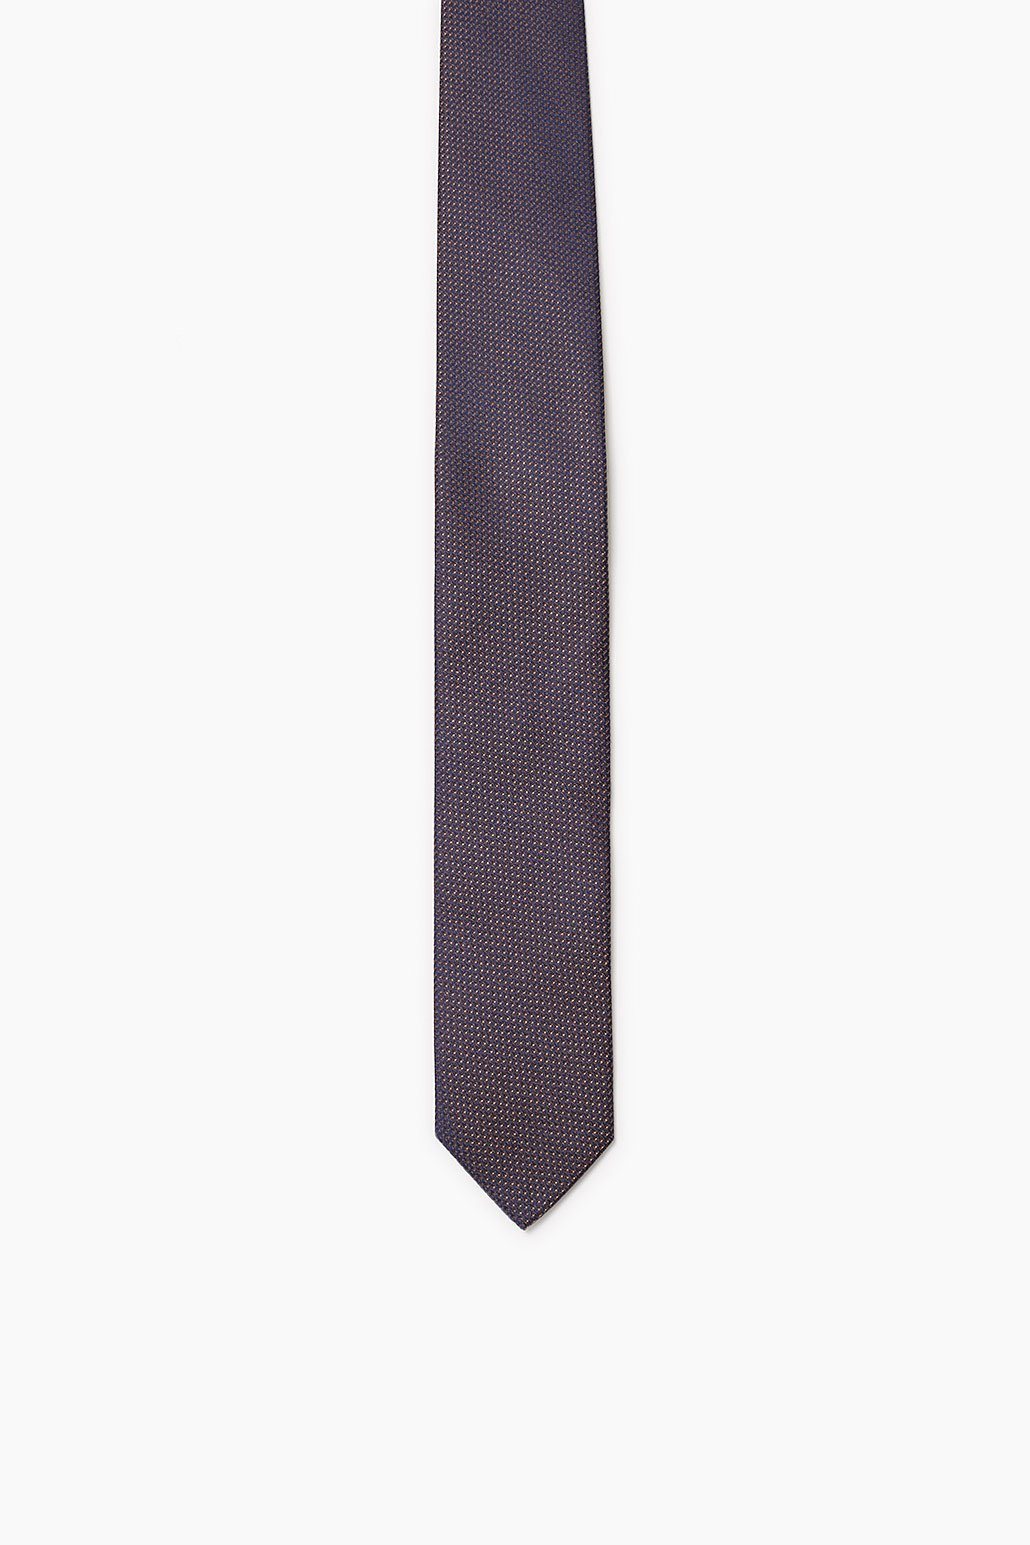 ESPRIT COLLECTION Krawatte mit 2Tone-Struktur, 100% Seide